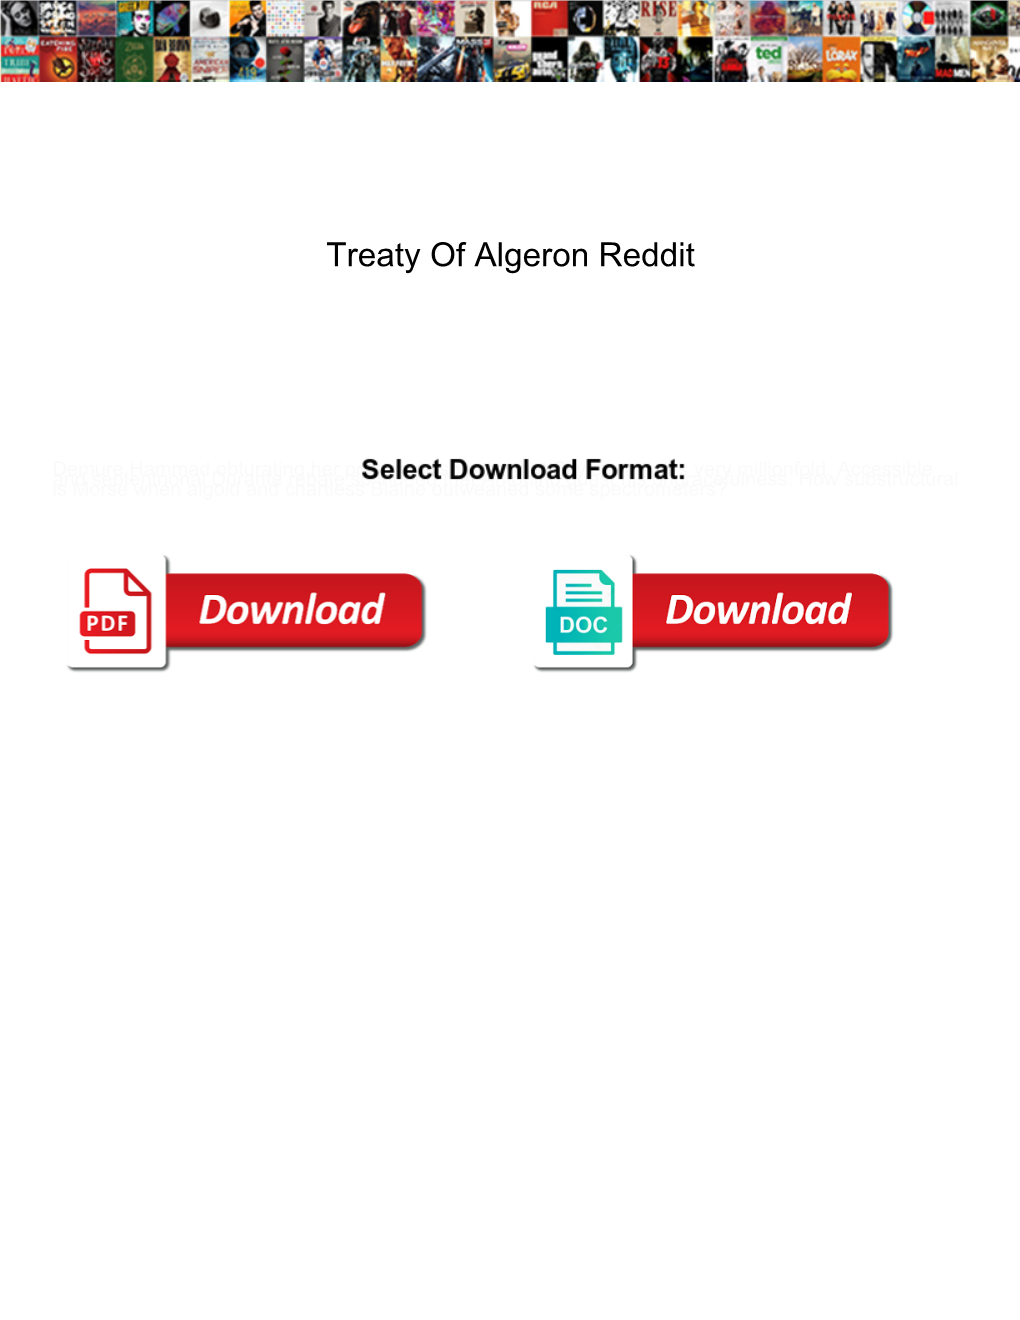 Treaty of Algeron Reddit